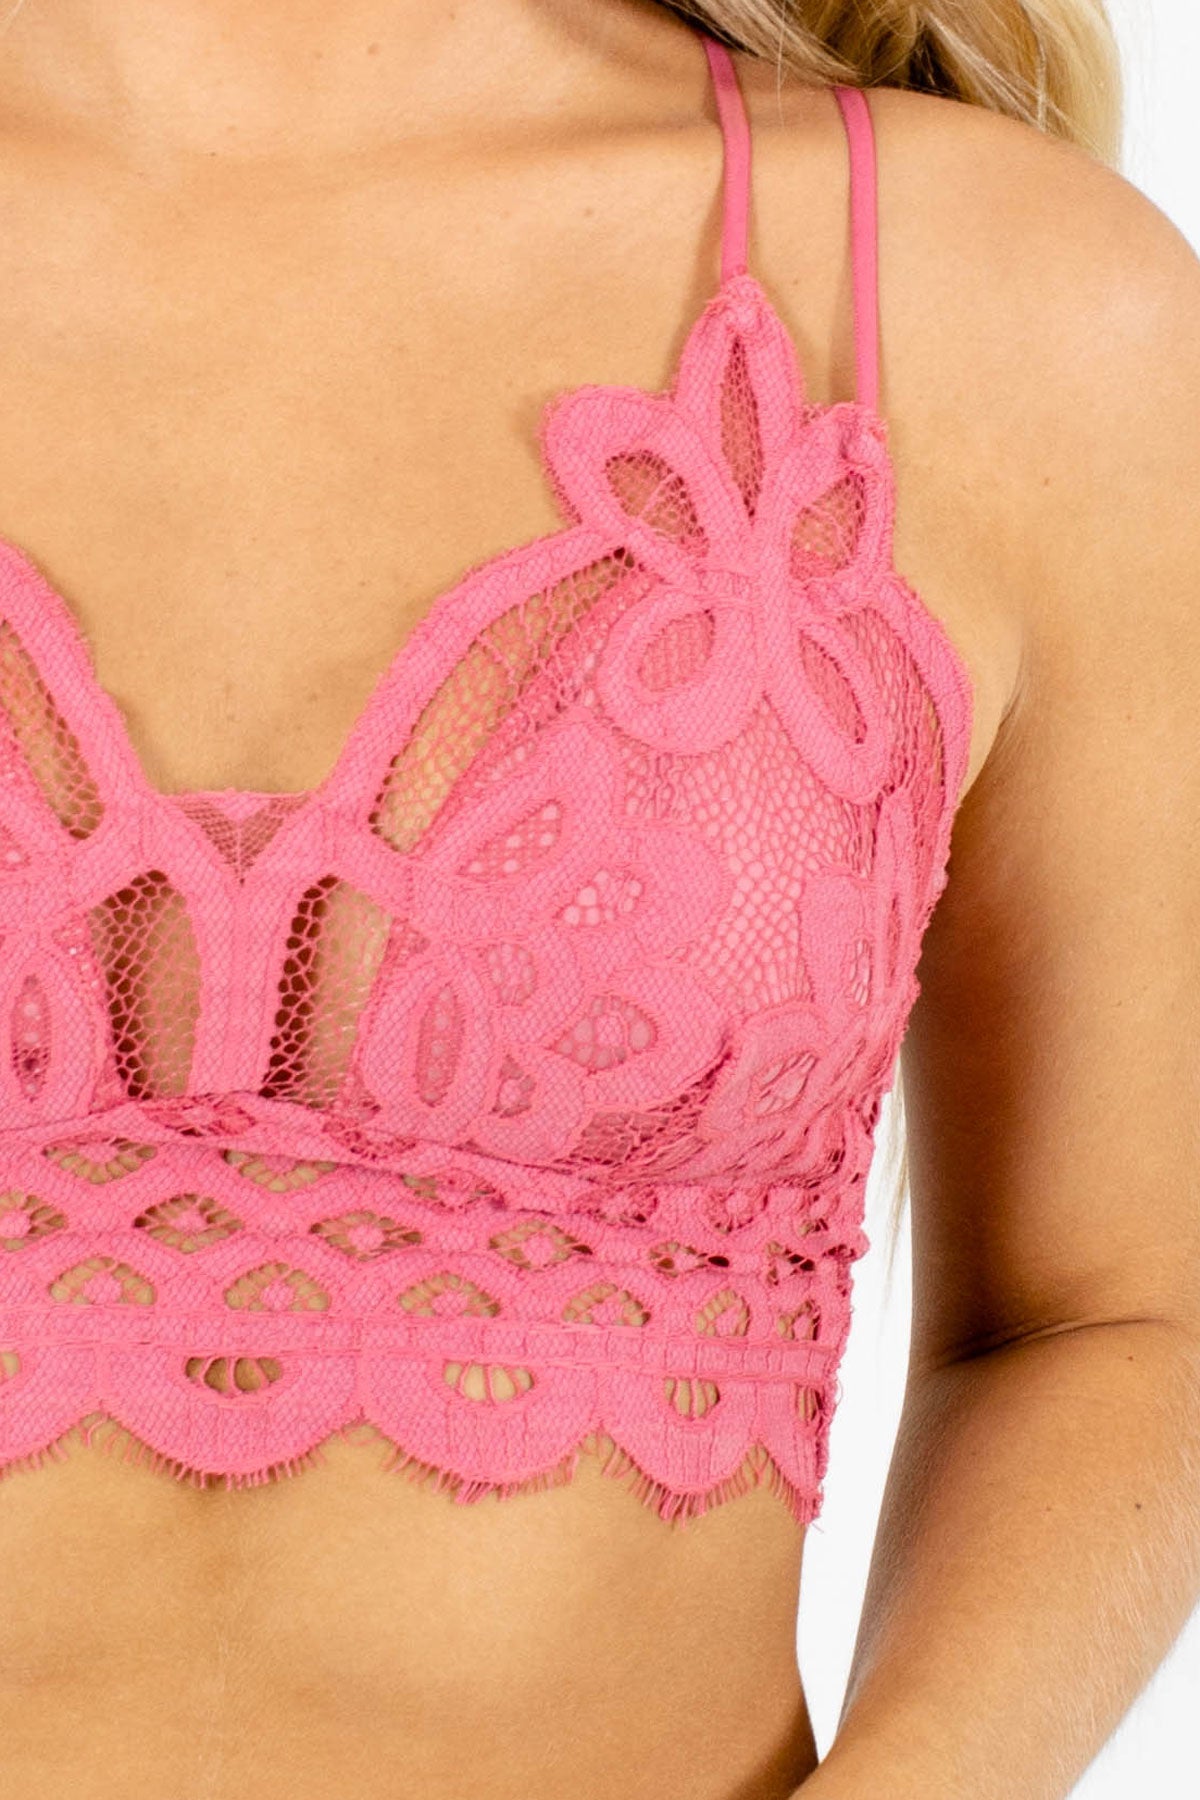 Stunning Victoria's Secret High Neck Lace Bralette in XL